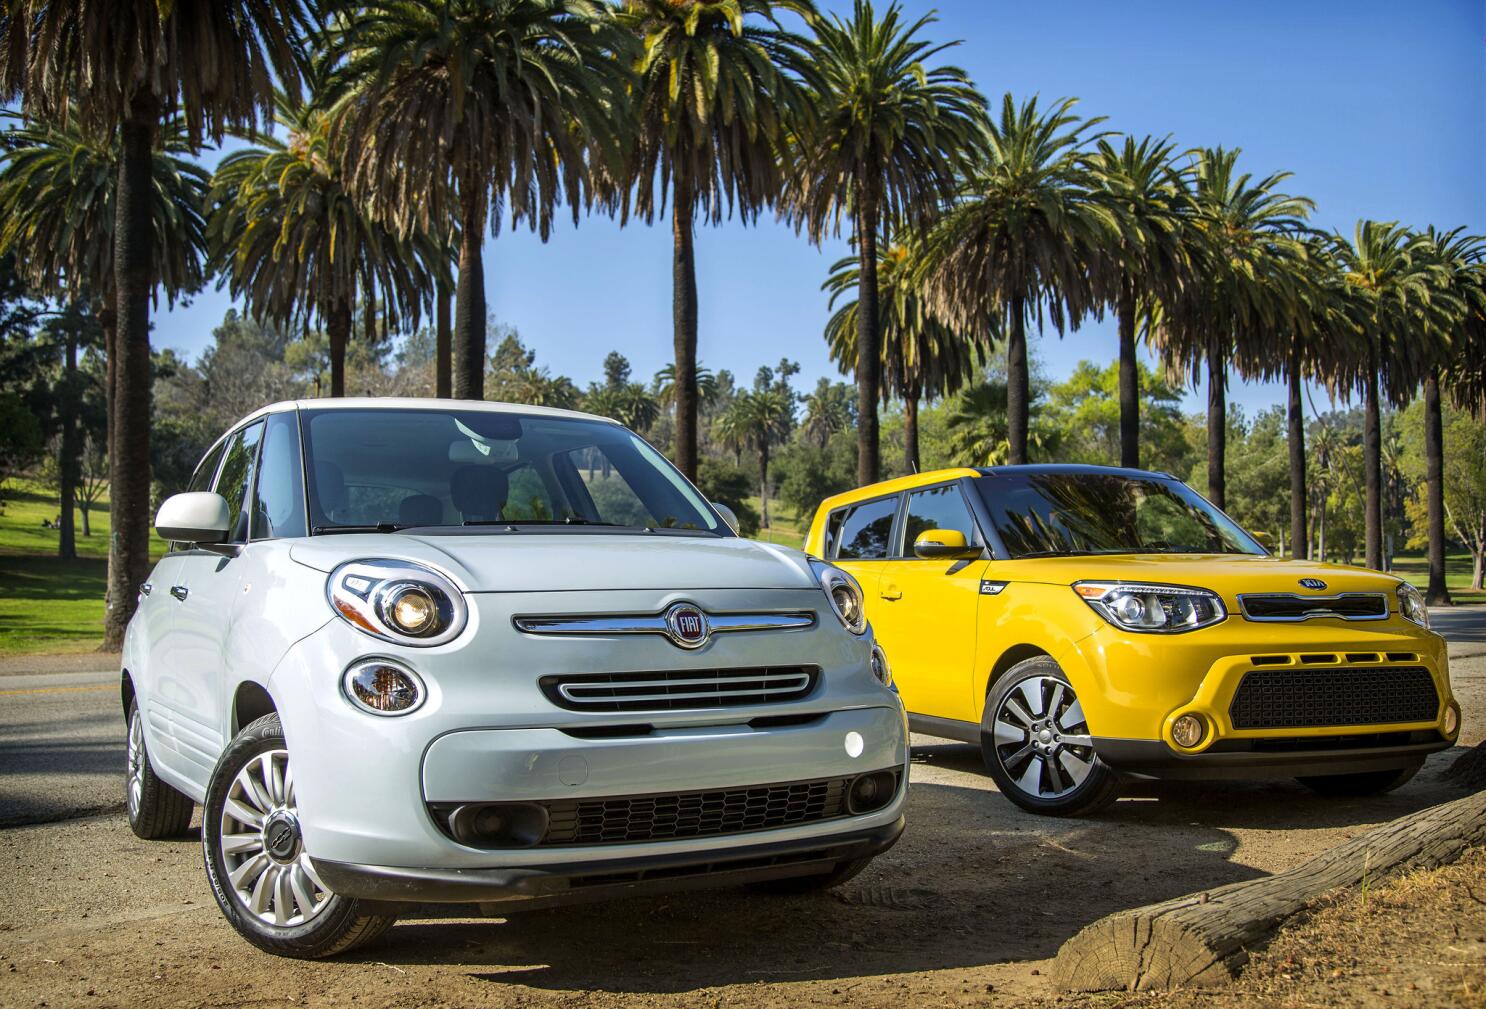 Fiat's 500L falls flat while Kia's Soul soars - Los Angeles Times